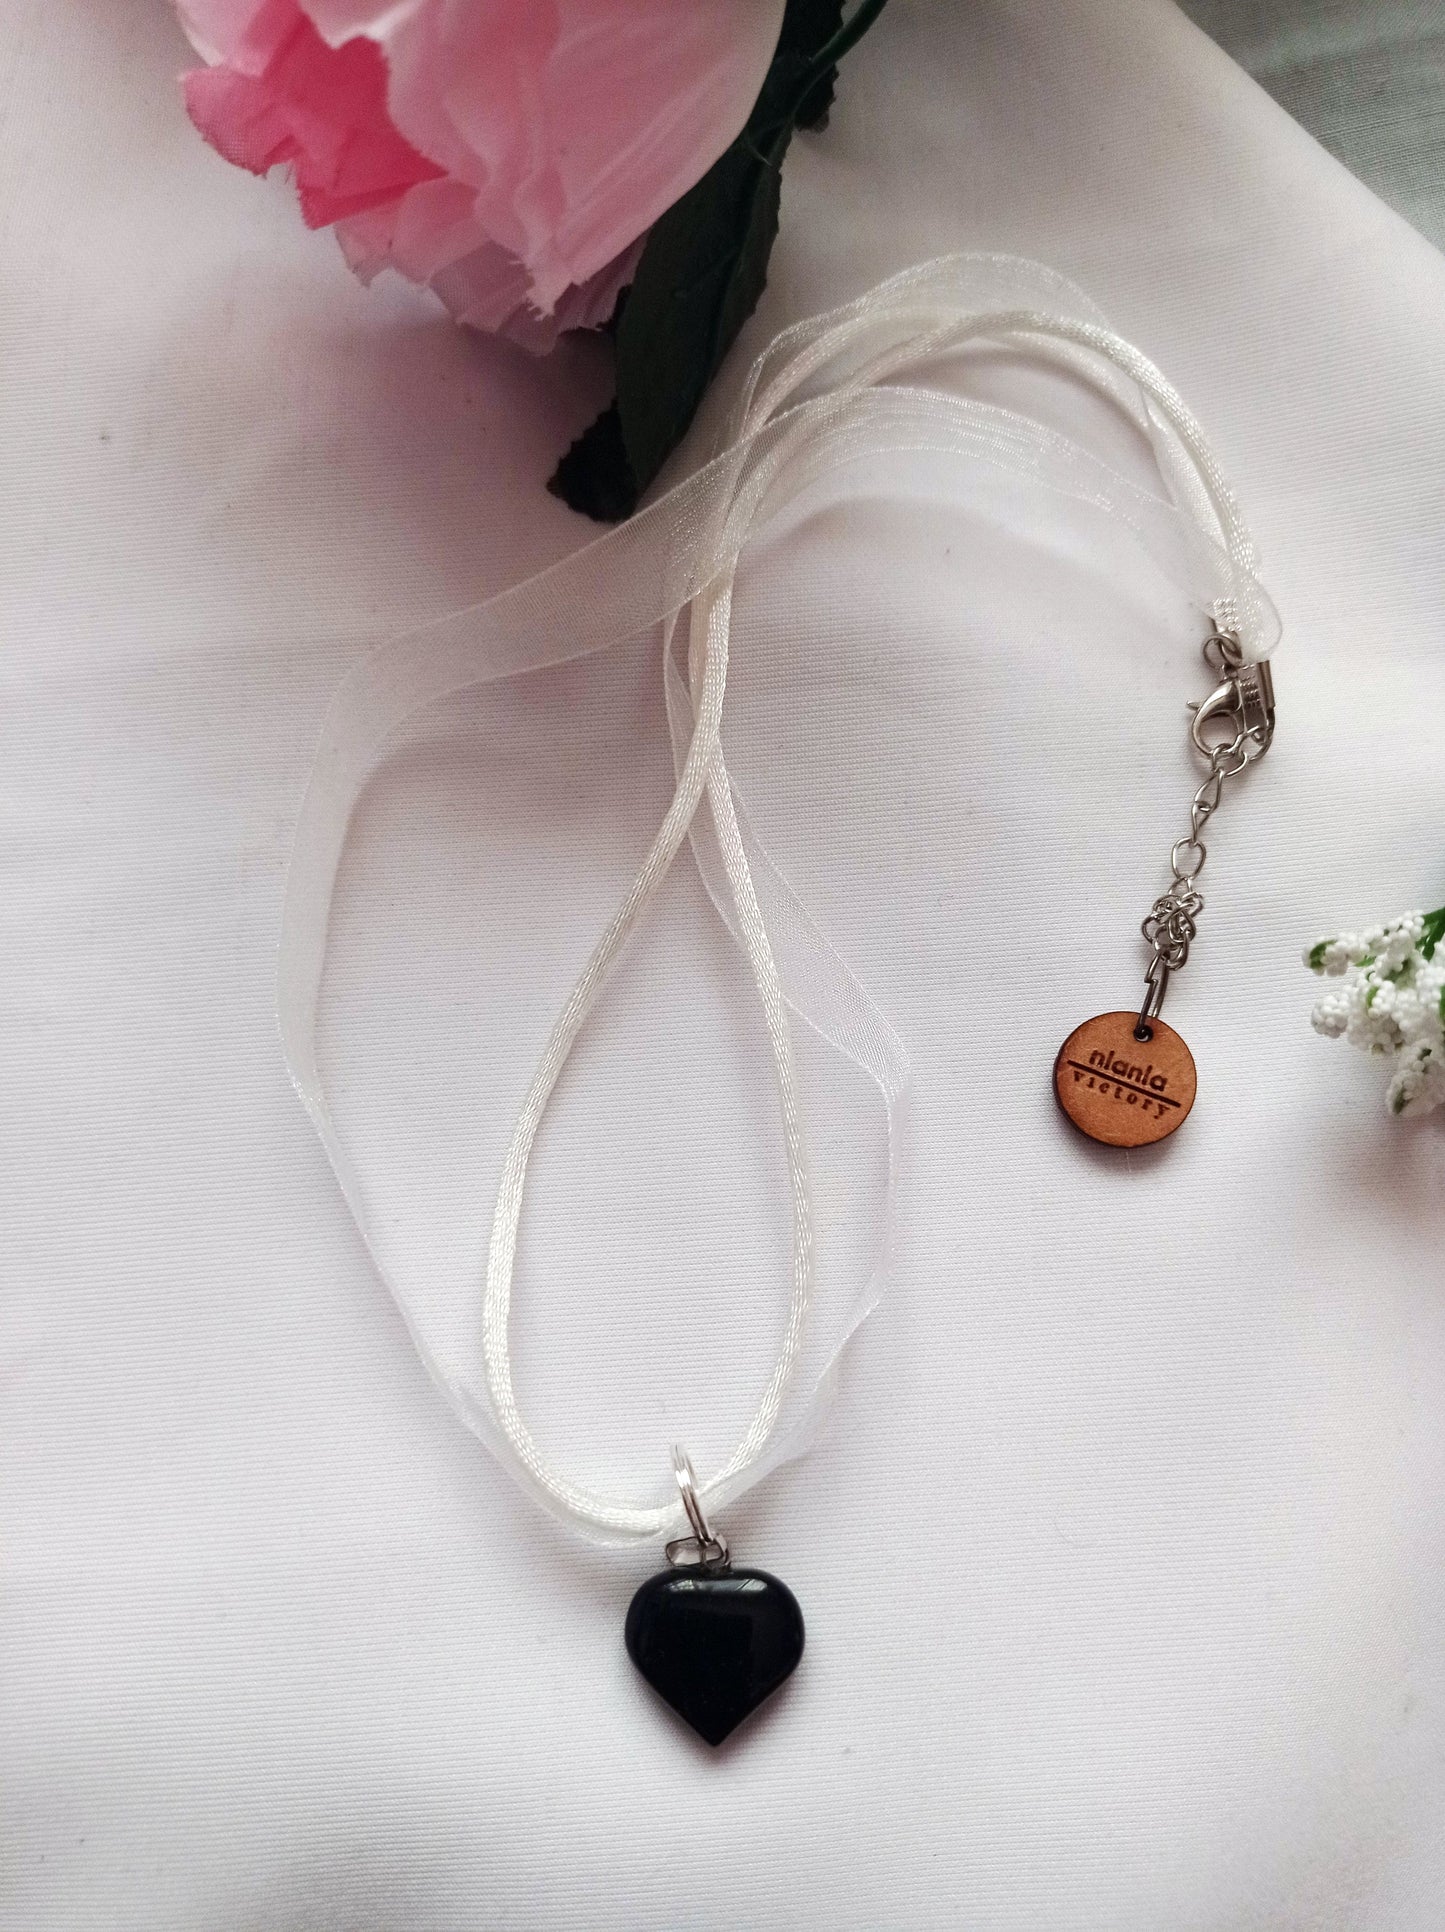 Black Onyx Necklace, White Ribbon Necklace, Gemstone Necklace, Black and White | by nlanlaVictory-2